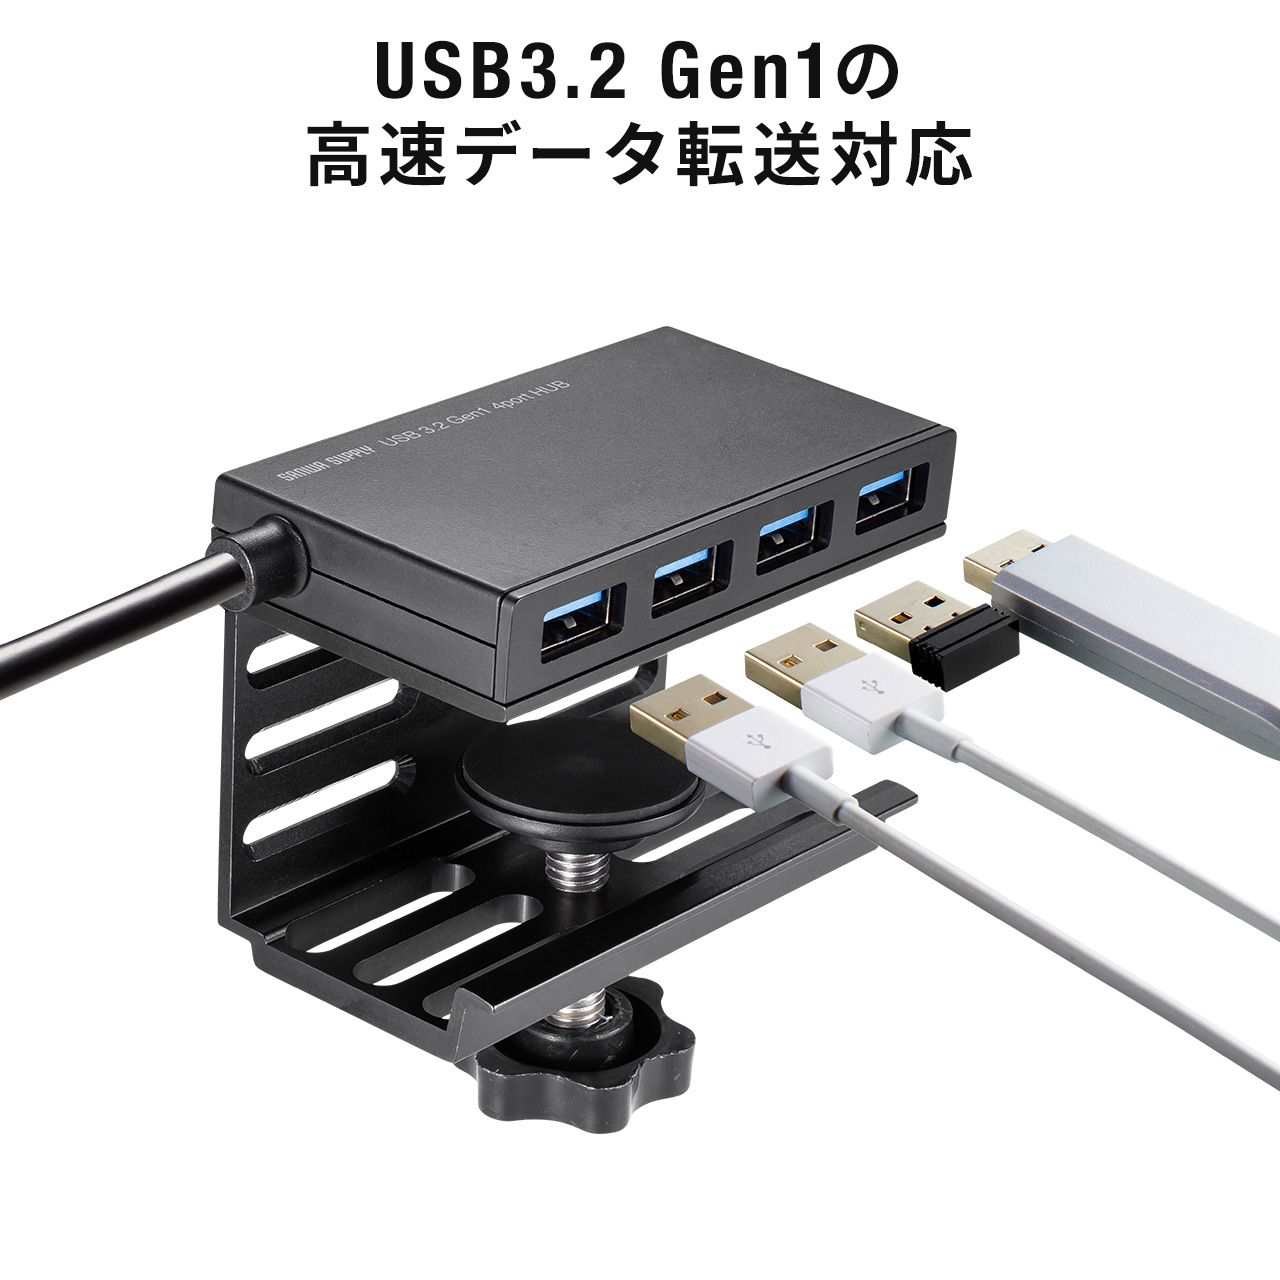 USBハブ クランプ式 Type-C USB3.2 Gen1 4ポート机 固定 ケーブル長1m 400-HUBC098+400-HUBCLAMPのセット 402-HUBC098SET1